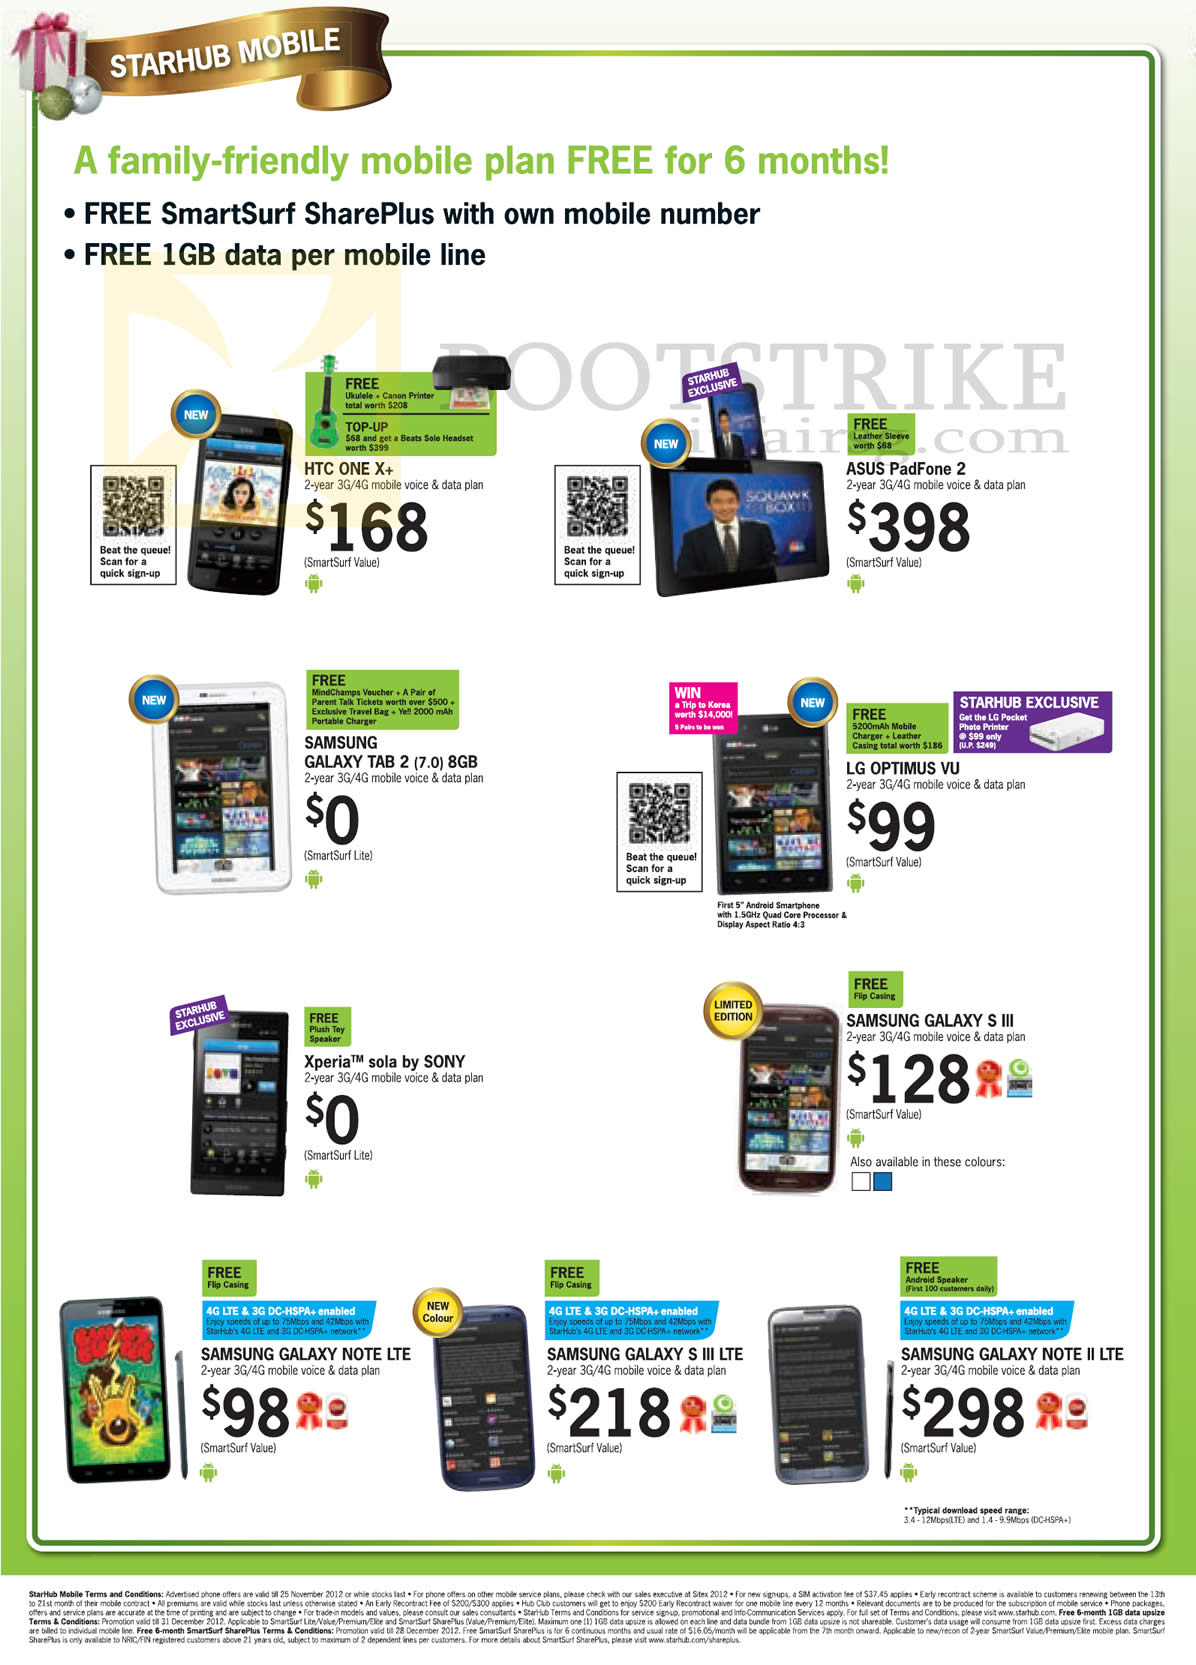 SITEX 2012 price list image brochure of Starhub Broadband Mobile Phones HTC One X PLus, ASUS PadFone 2, Samsung Galaxy S III, Tab 2 7.0, S III LTE, Note II LTE, LG Optimus Vu, Sony Xperia Sola